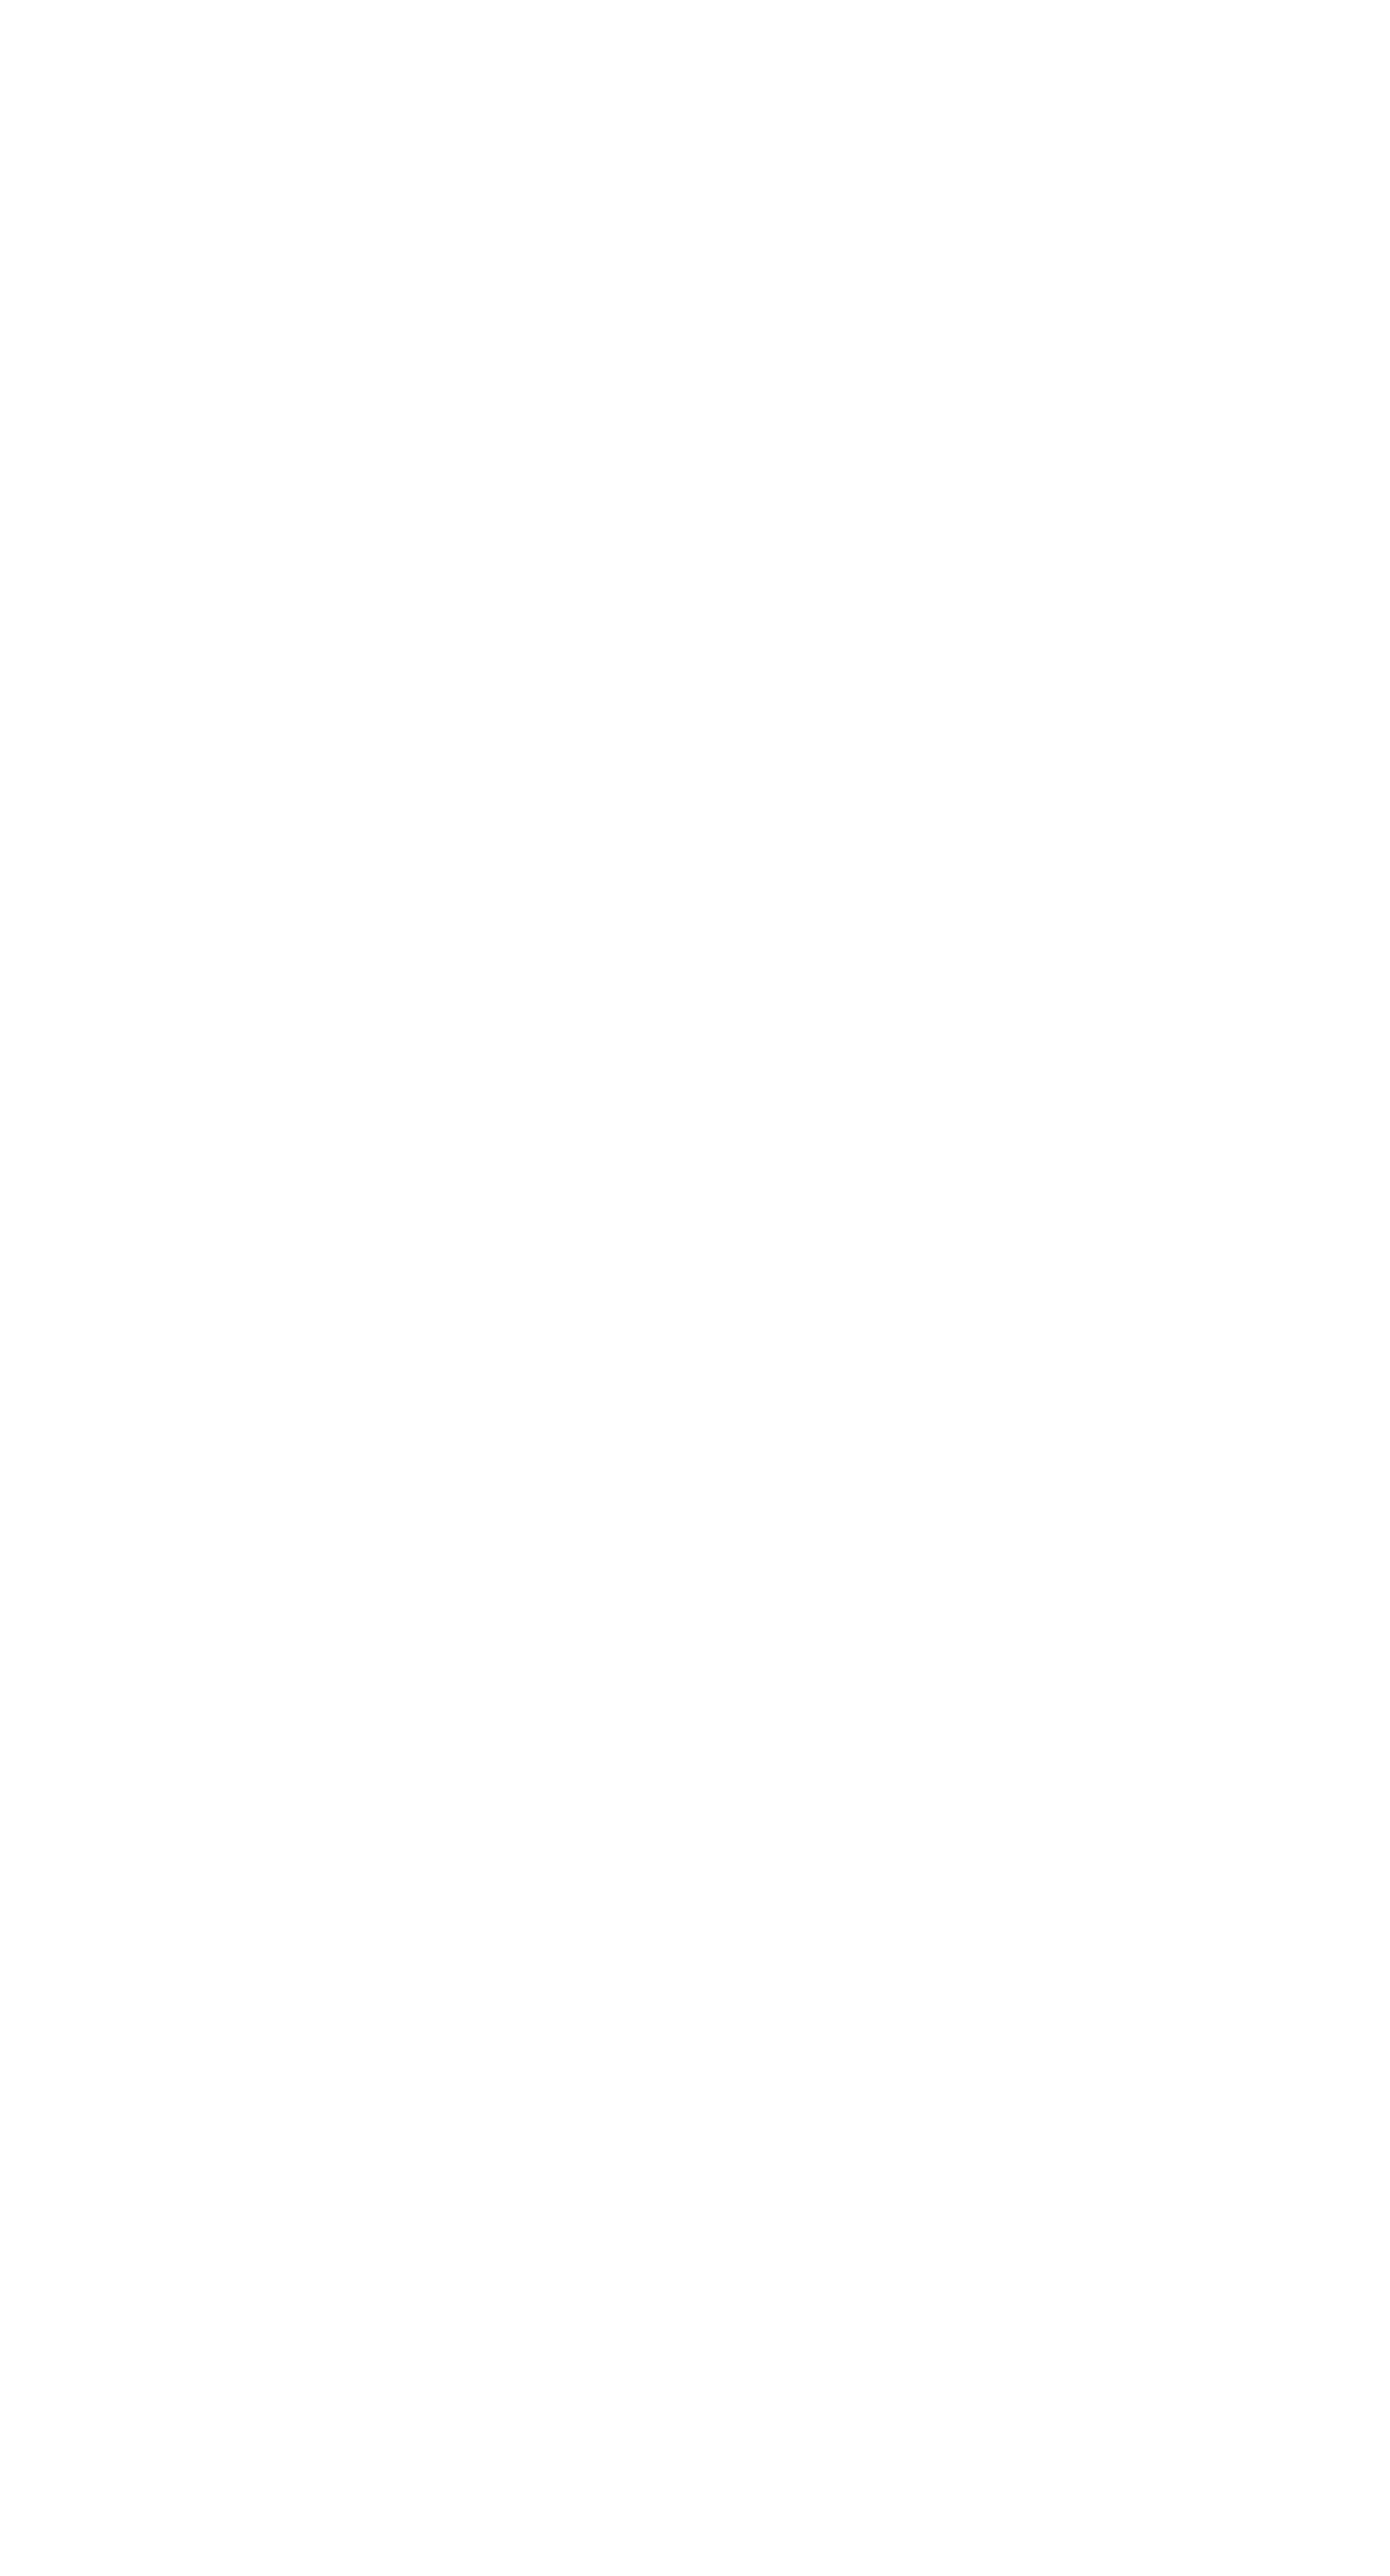 MARRYAT PLAYERS